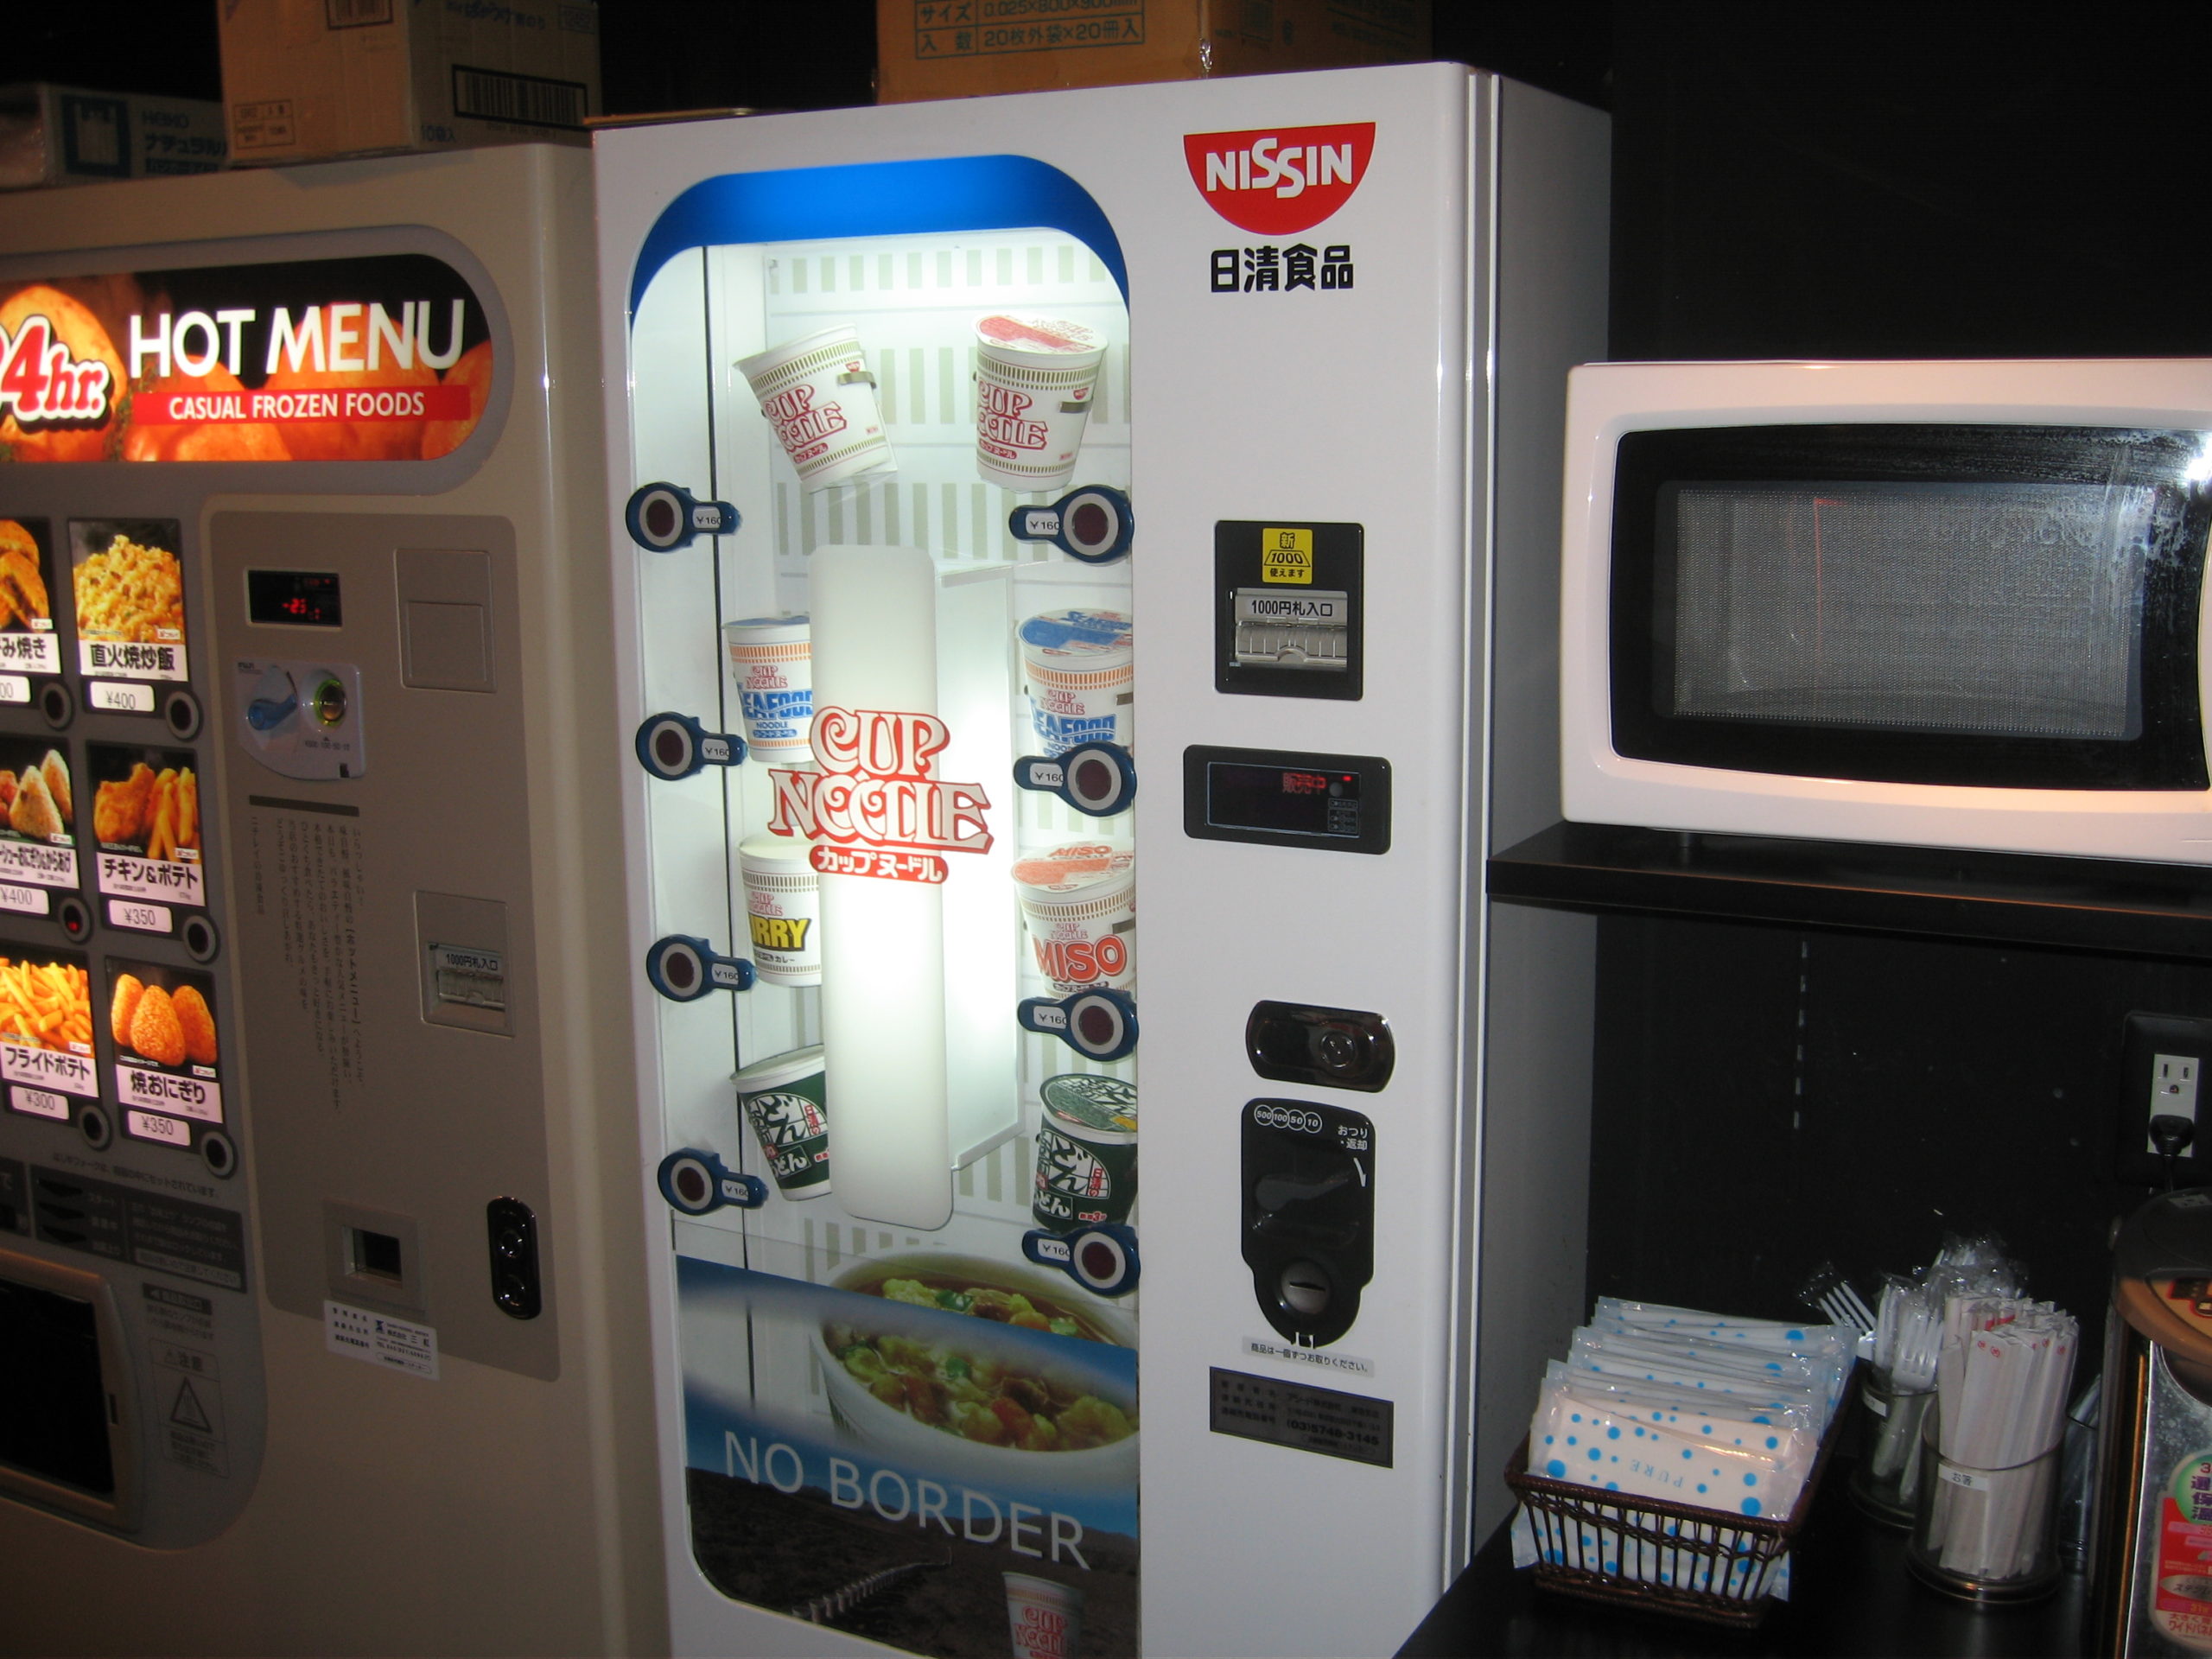 A noodle vending machine in Japan.